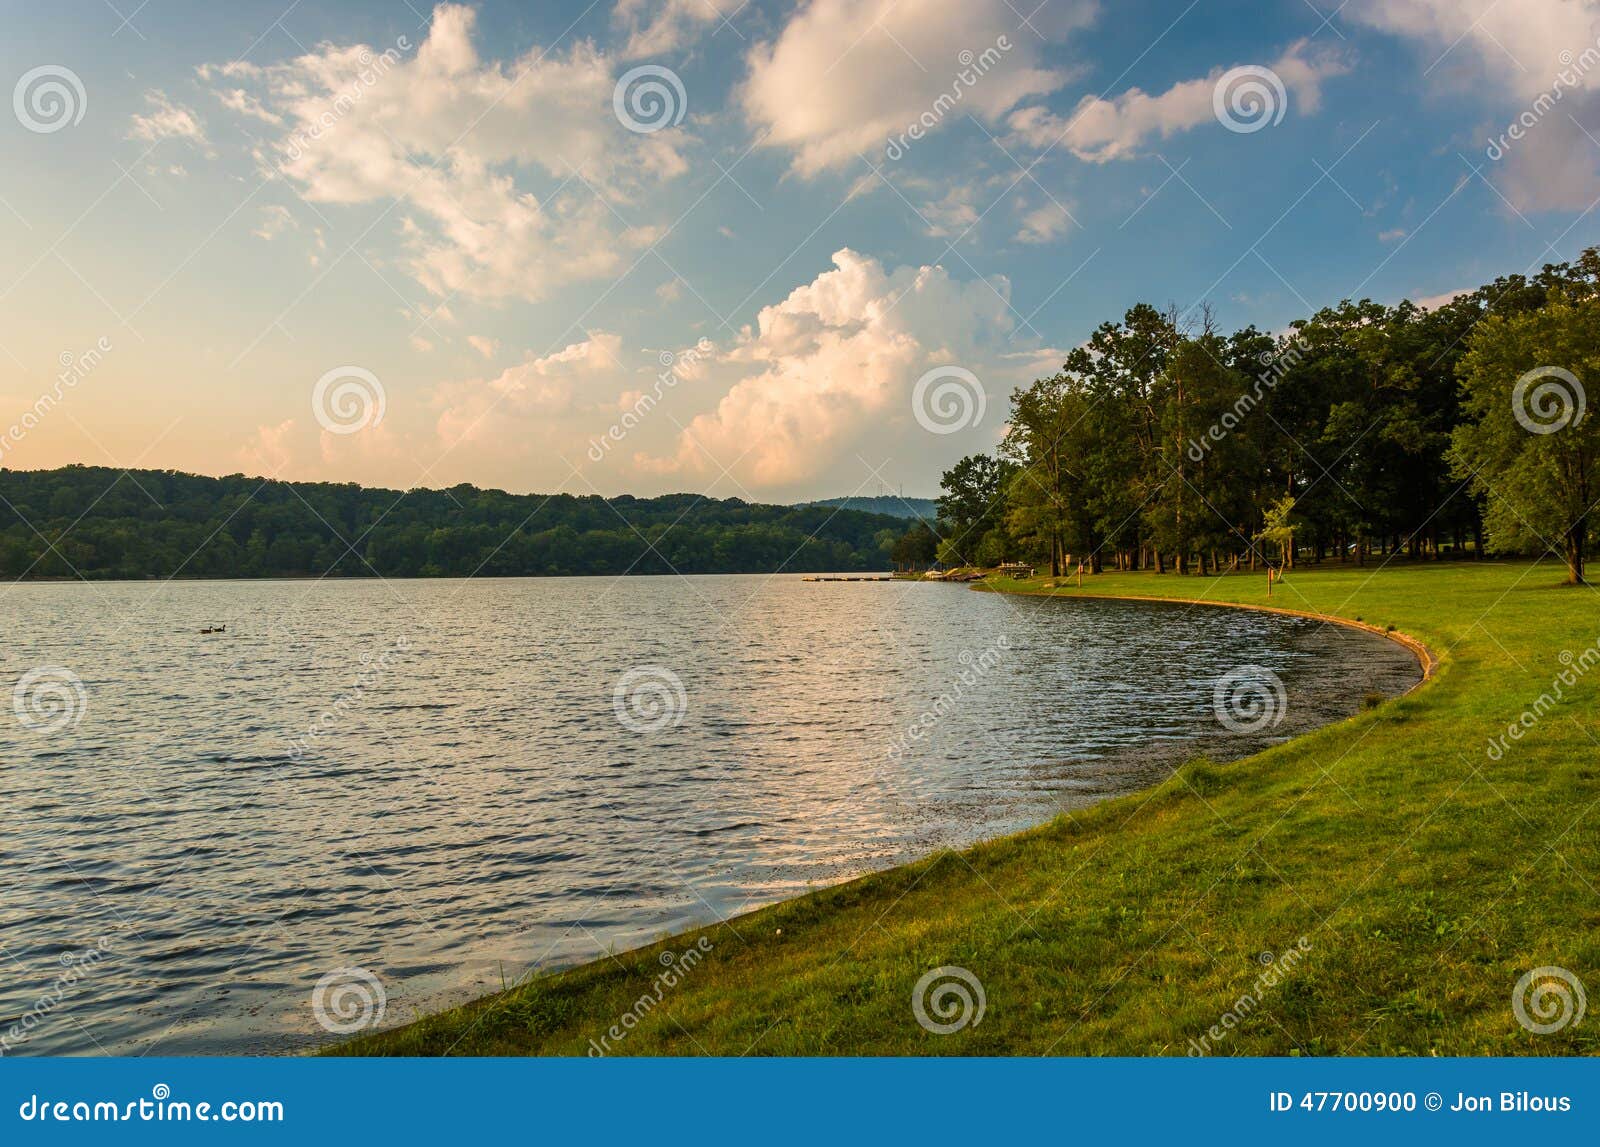 the shore of lake pinchot, gifford pinchot state park, pennsylvania.